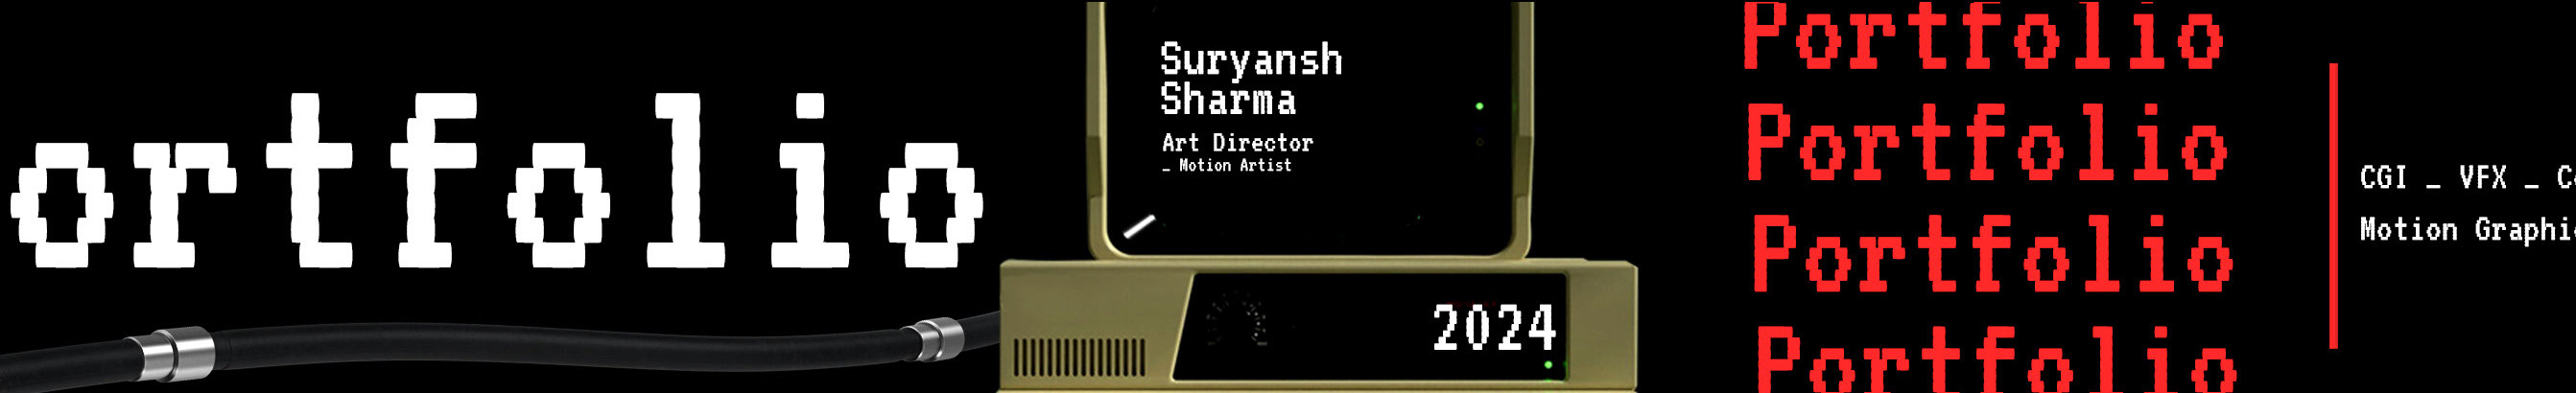 Profielbanner van Suryansh Sharma